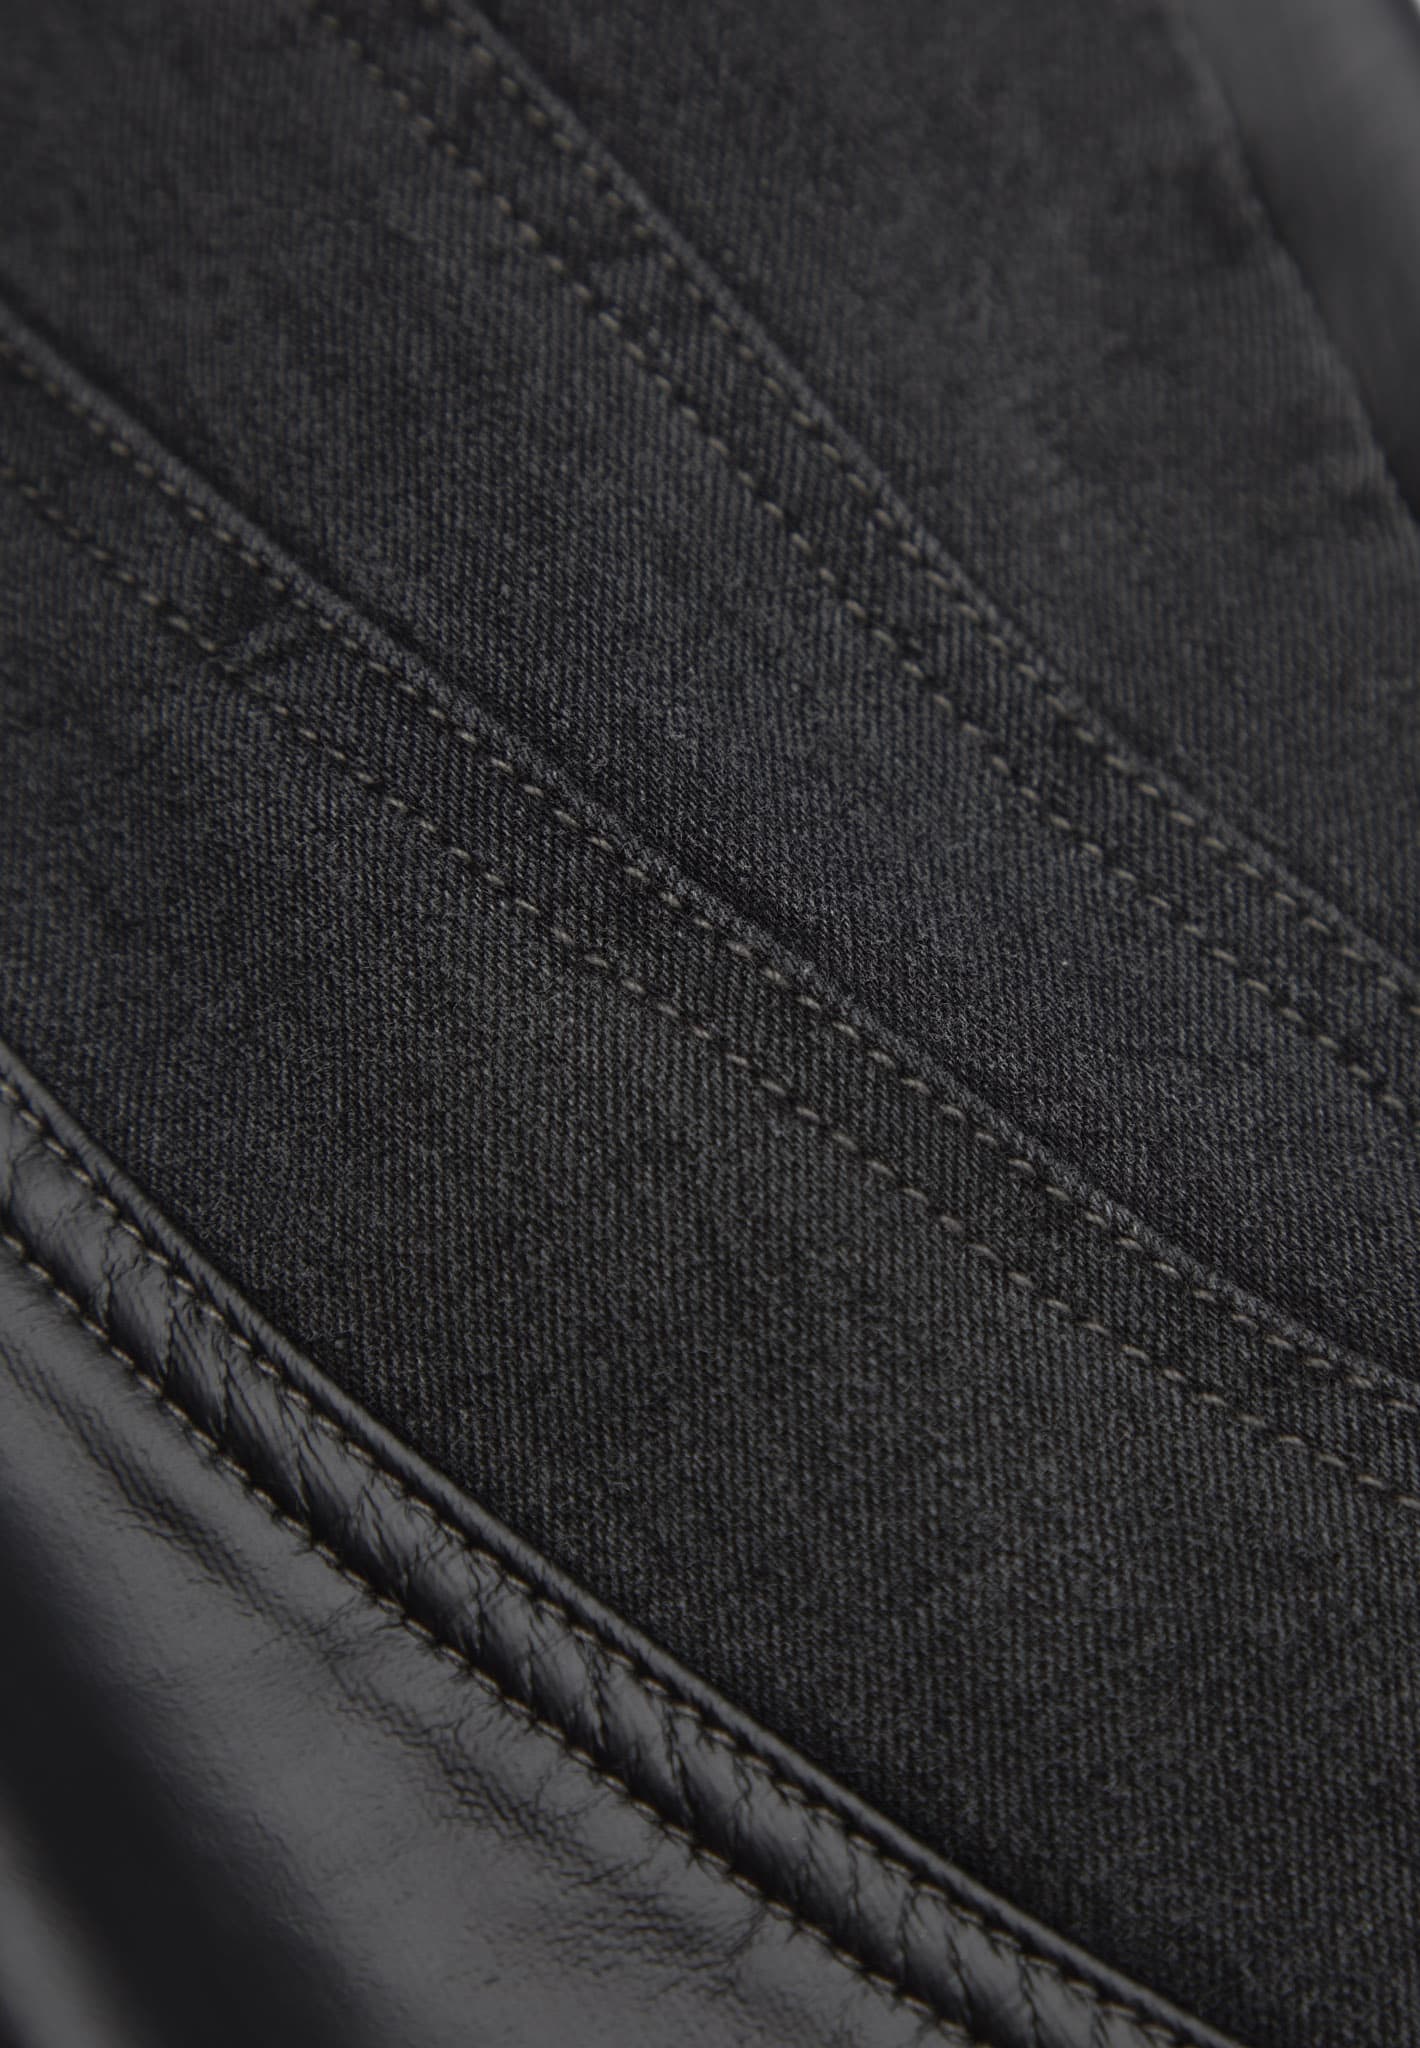 vegan-leather-contour-skinny-jeans-black